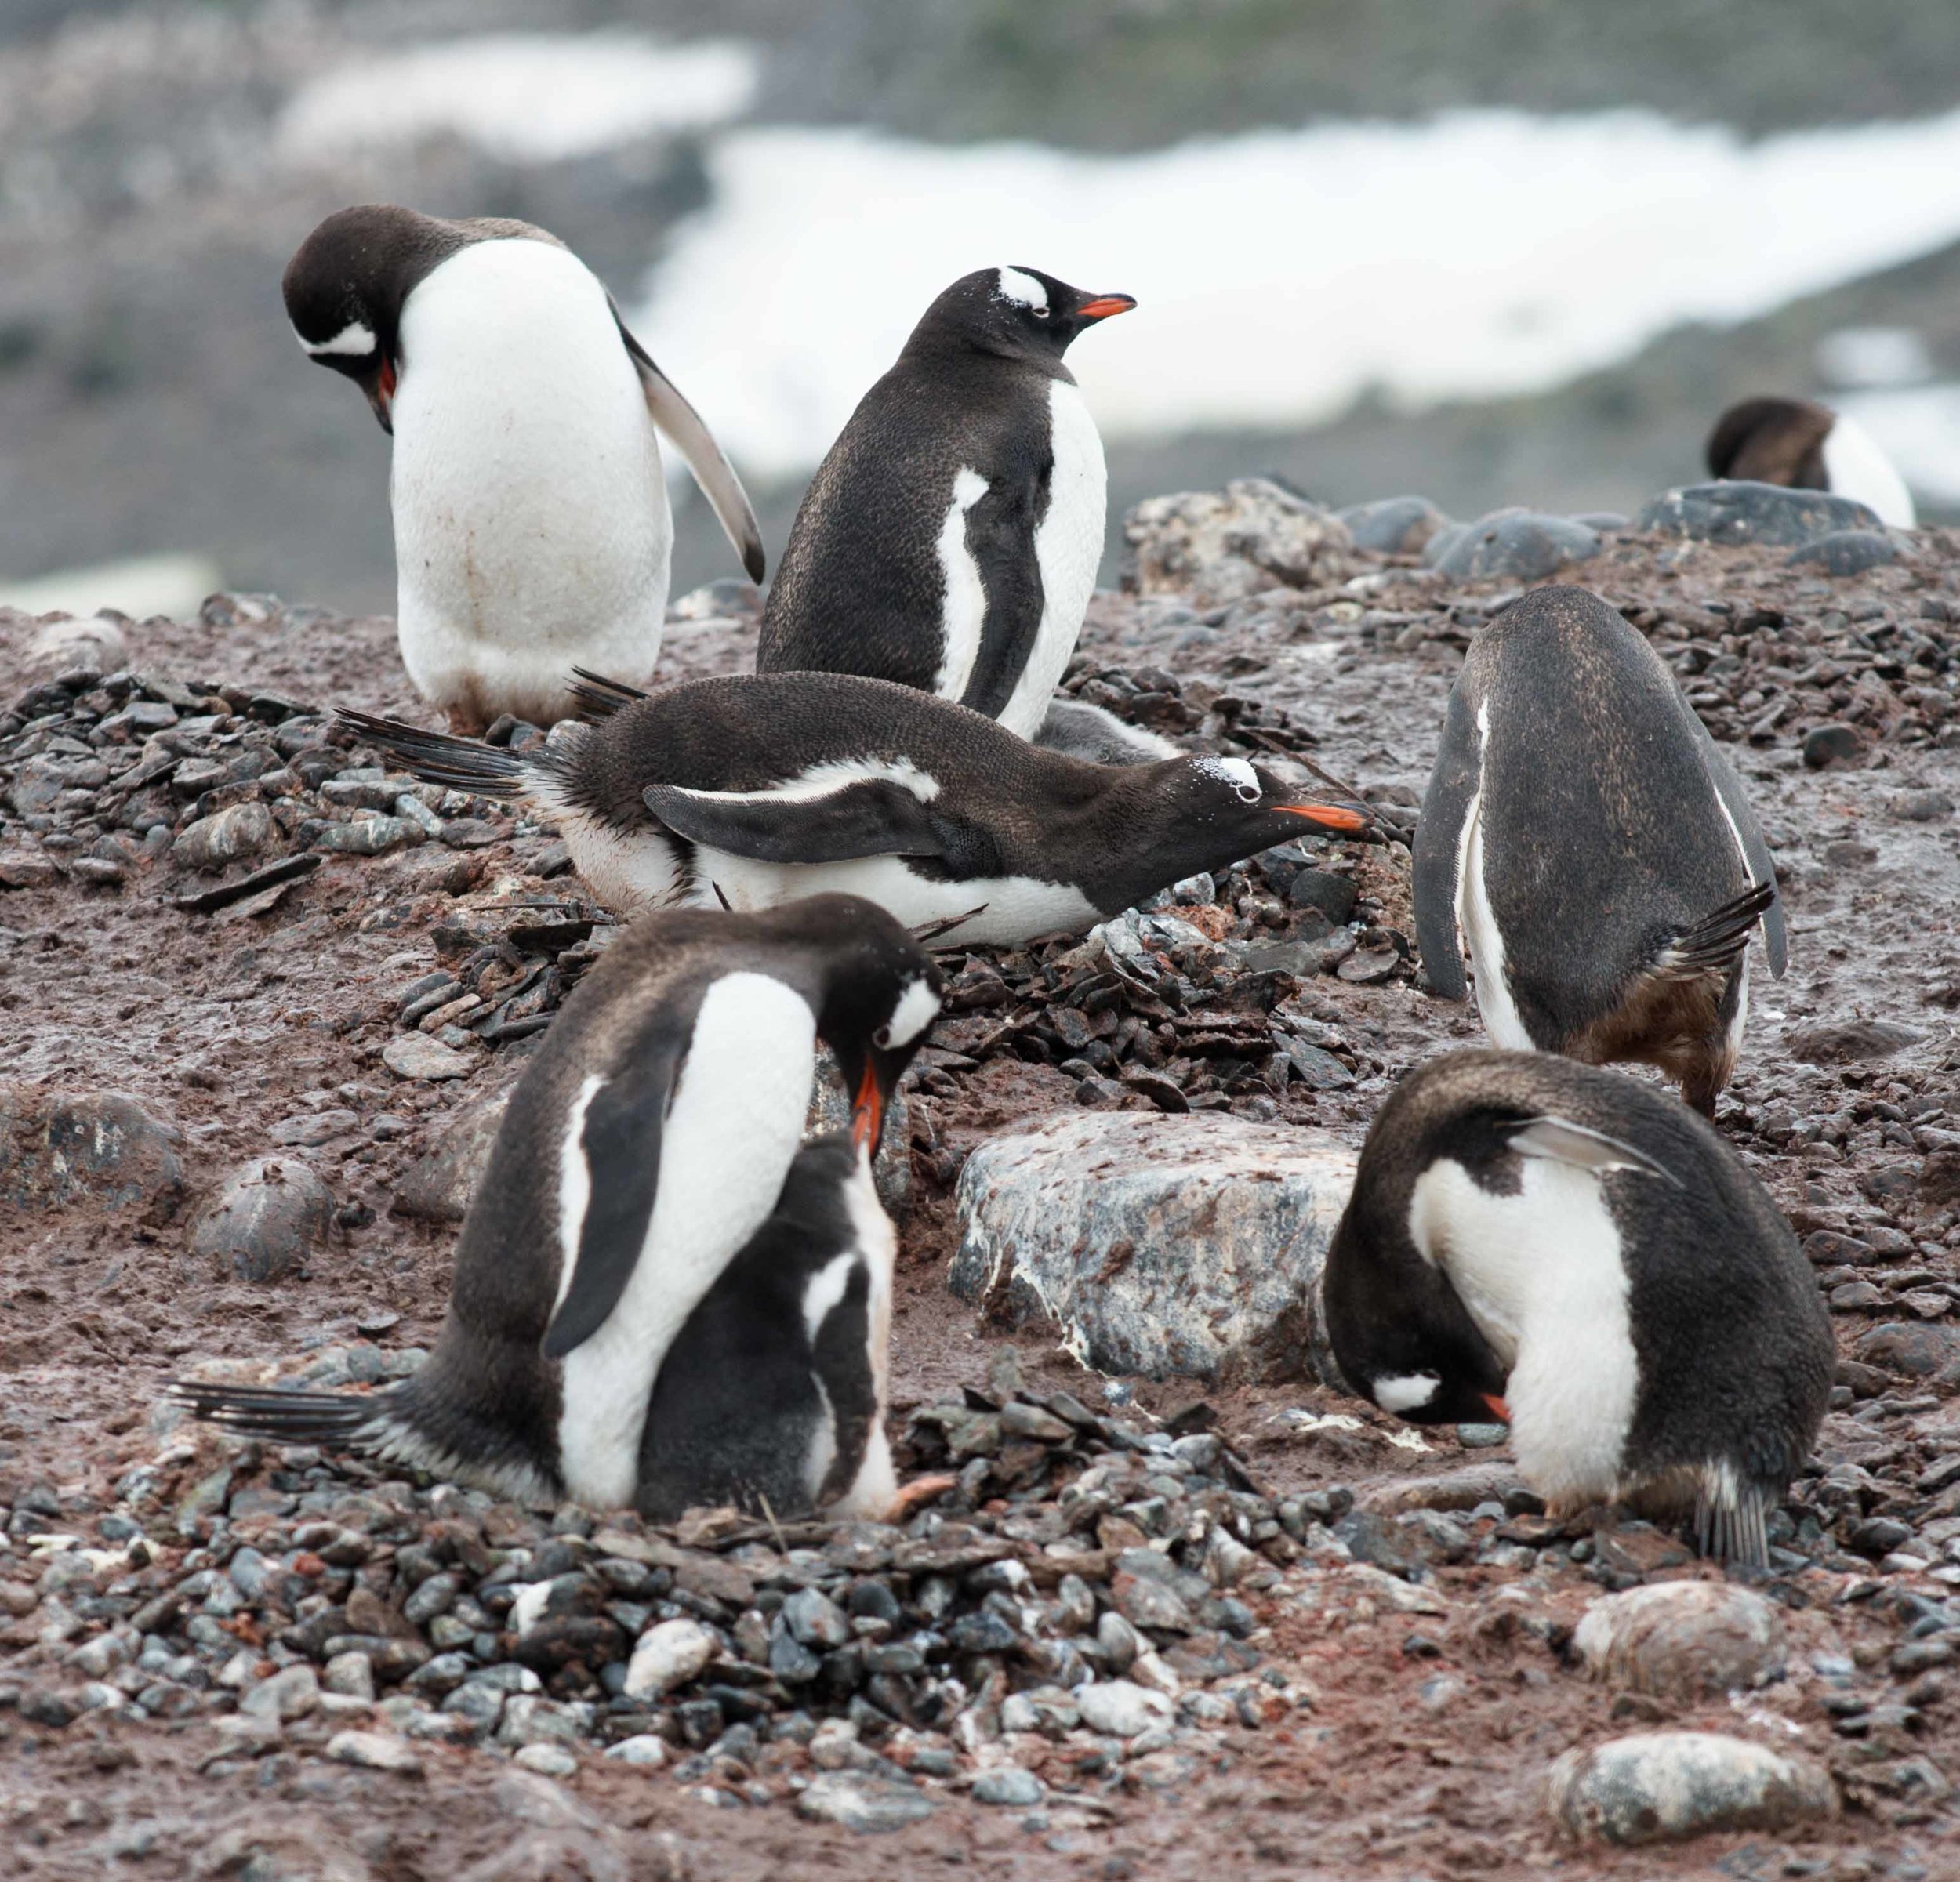 Gentoo penguins with chicks.